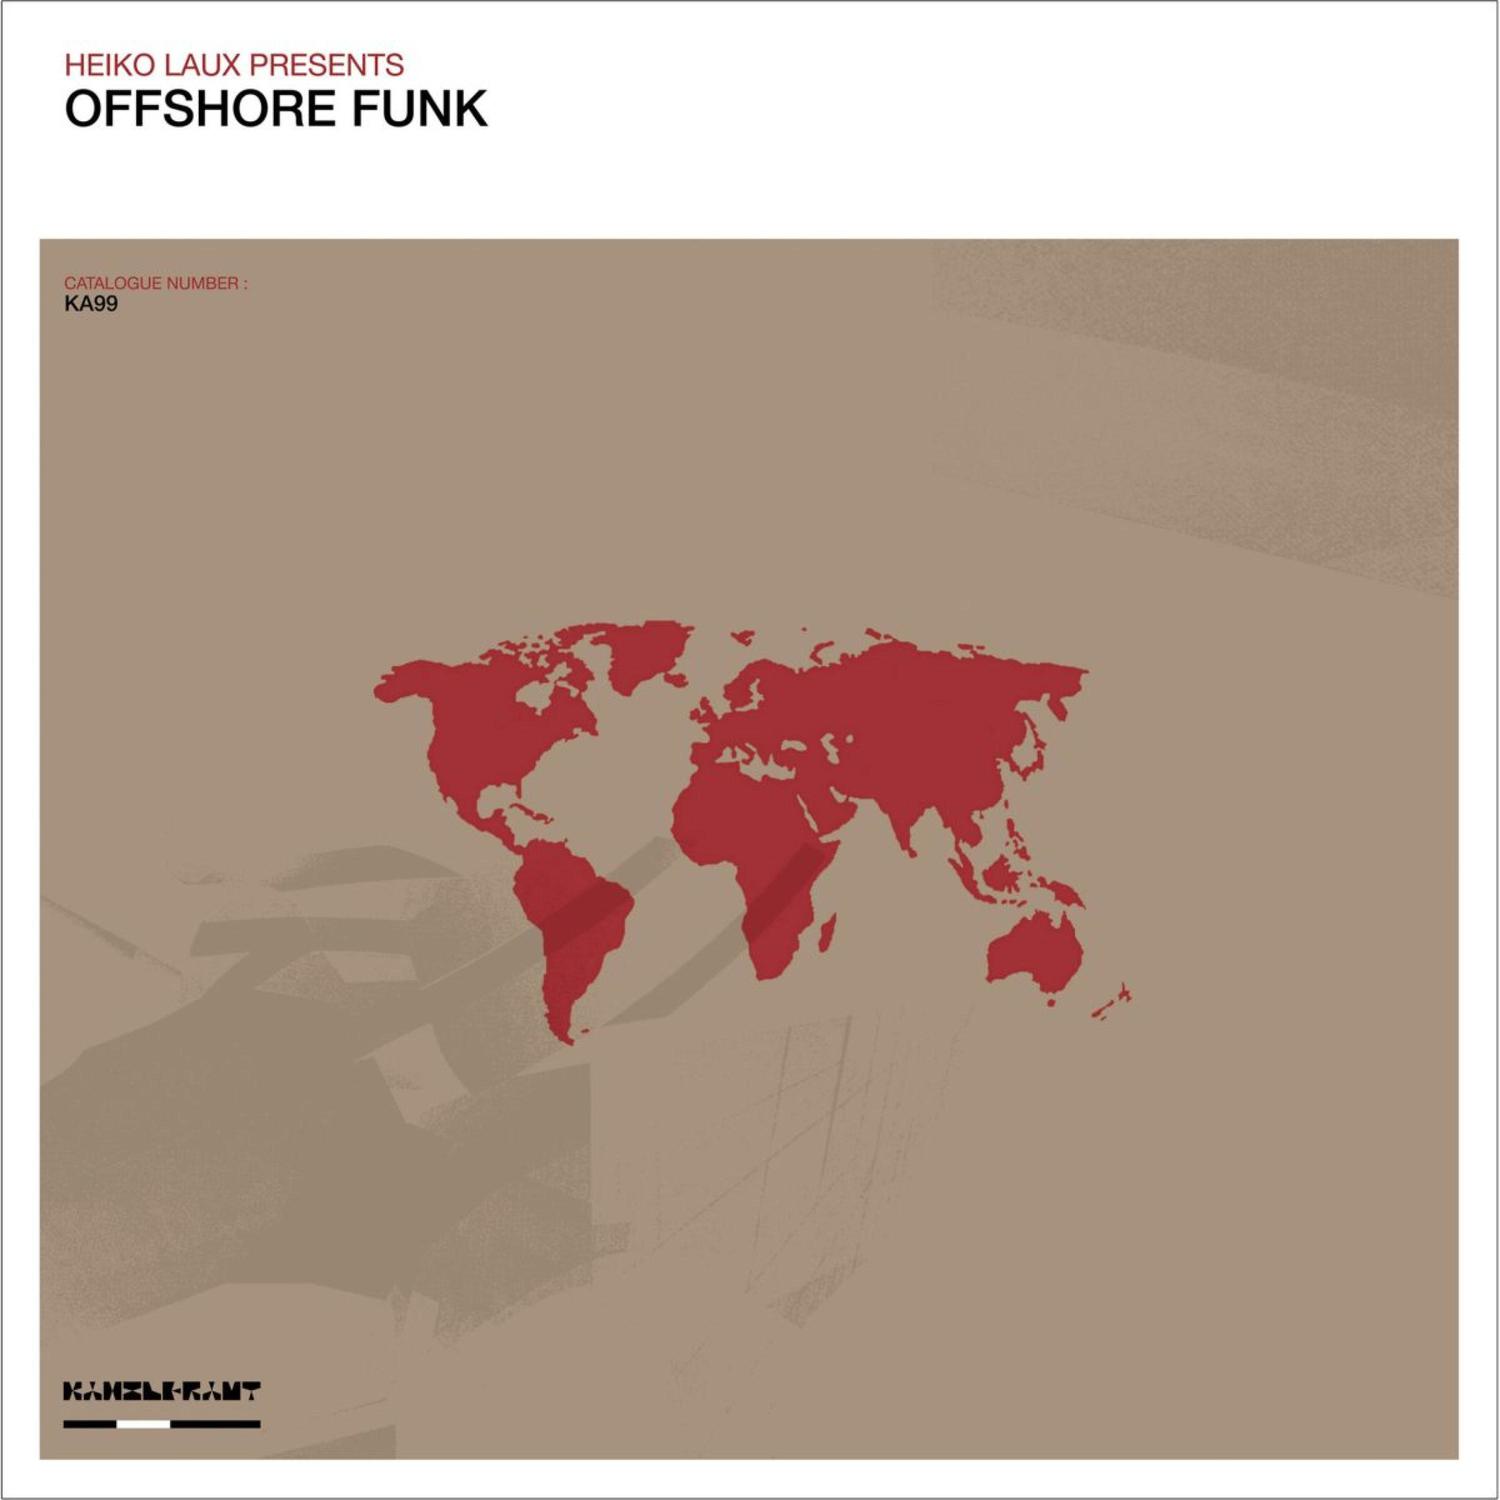 Offshore Funk